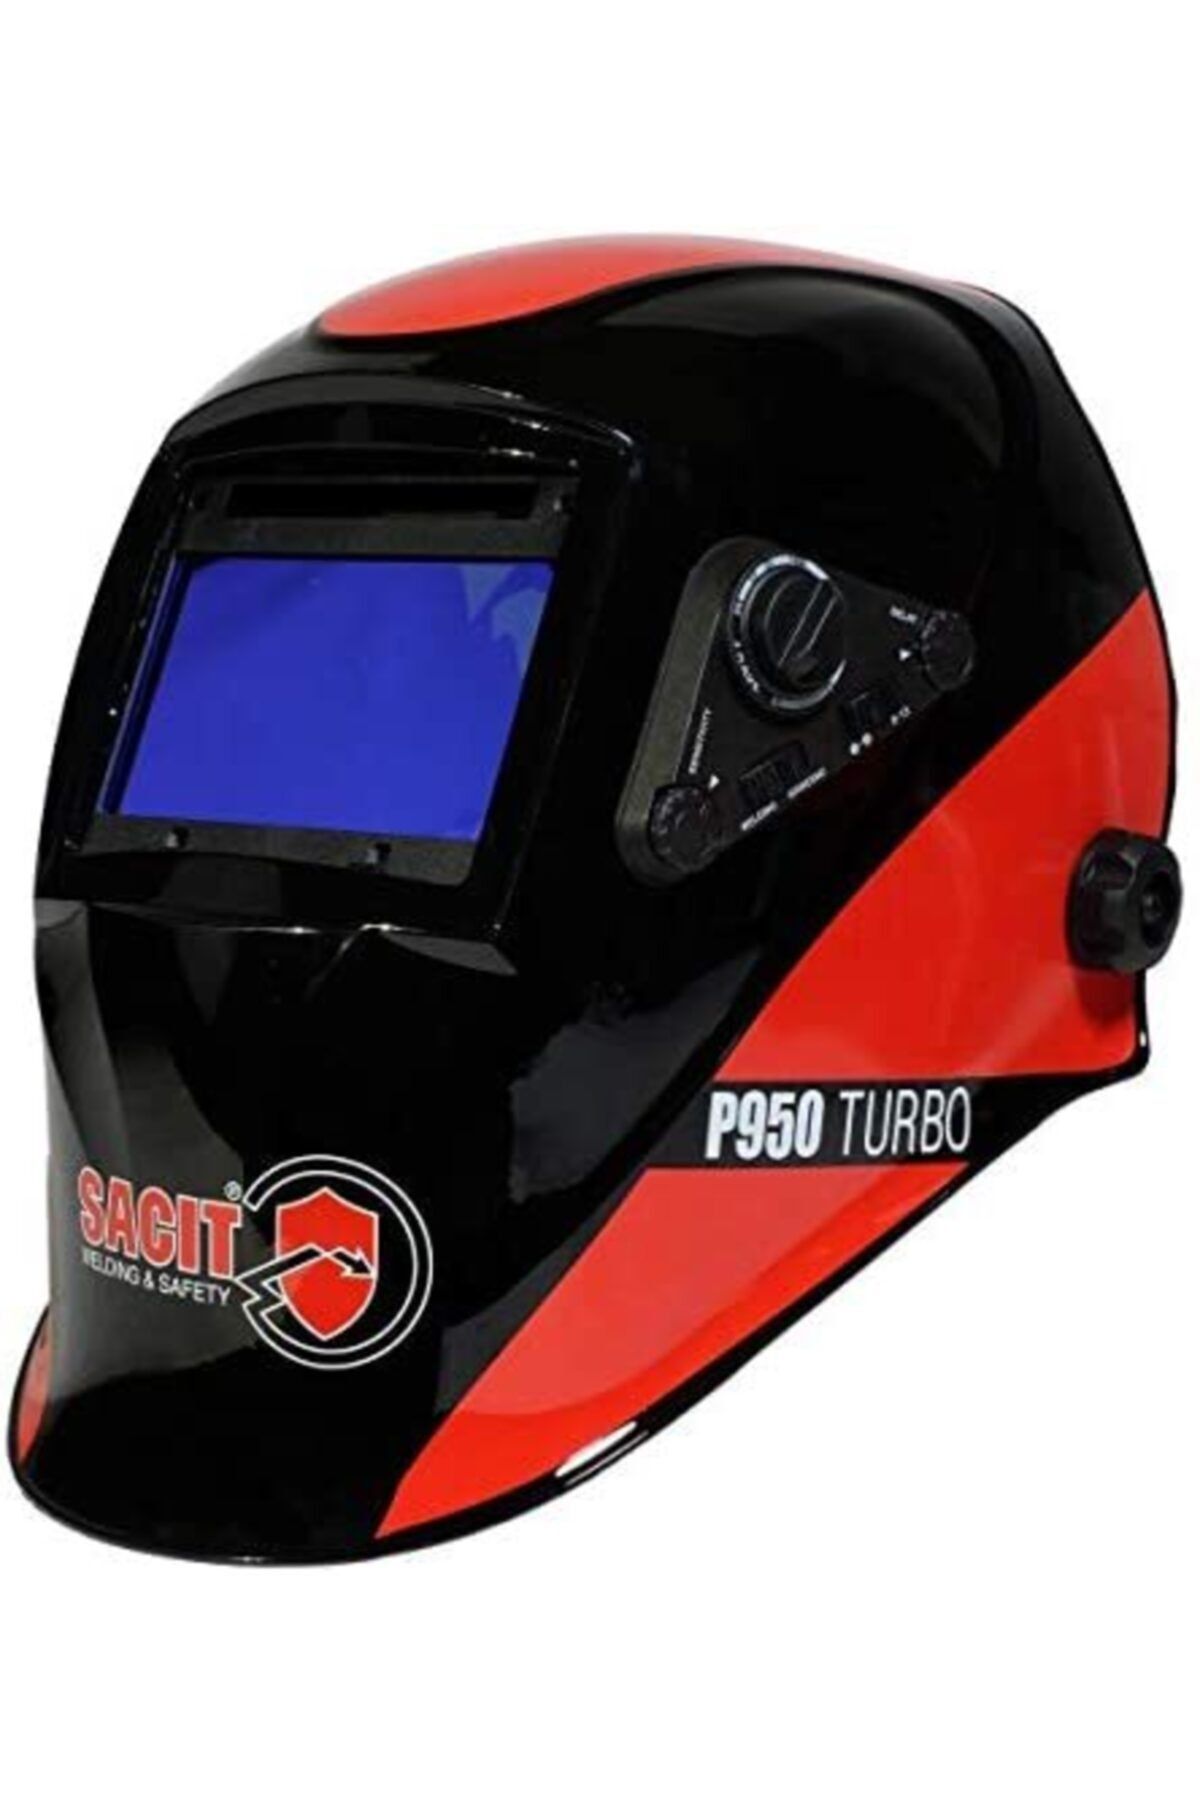 SACİT Sacıt P950 Turbo Otomatik Kararan Kaynak Maskesi